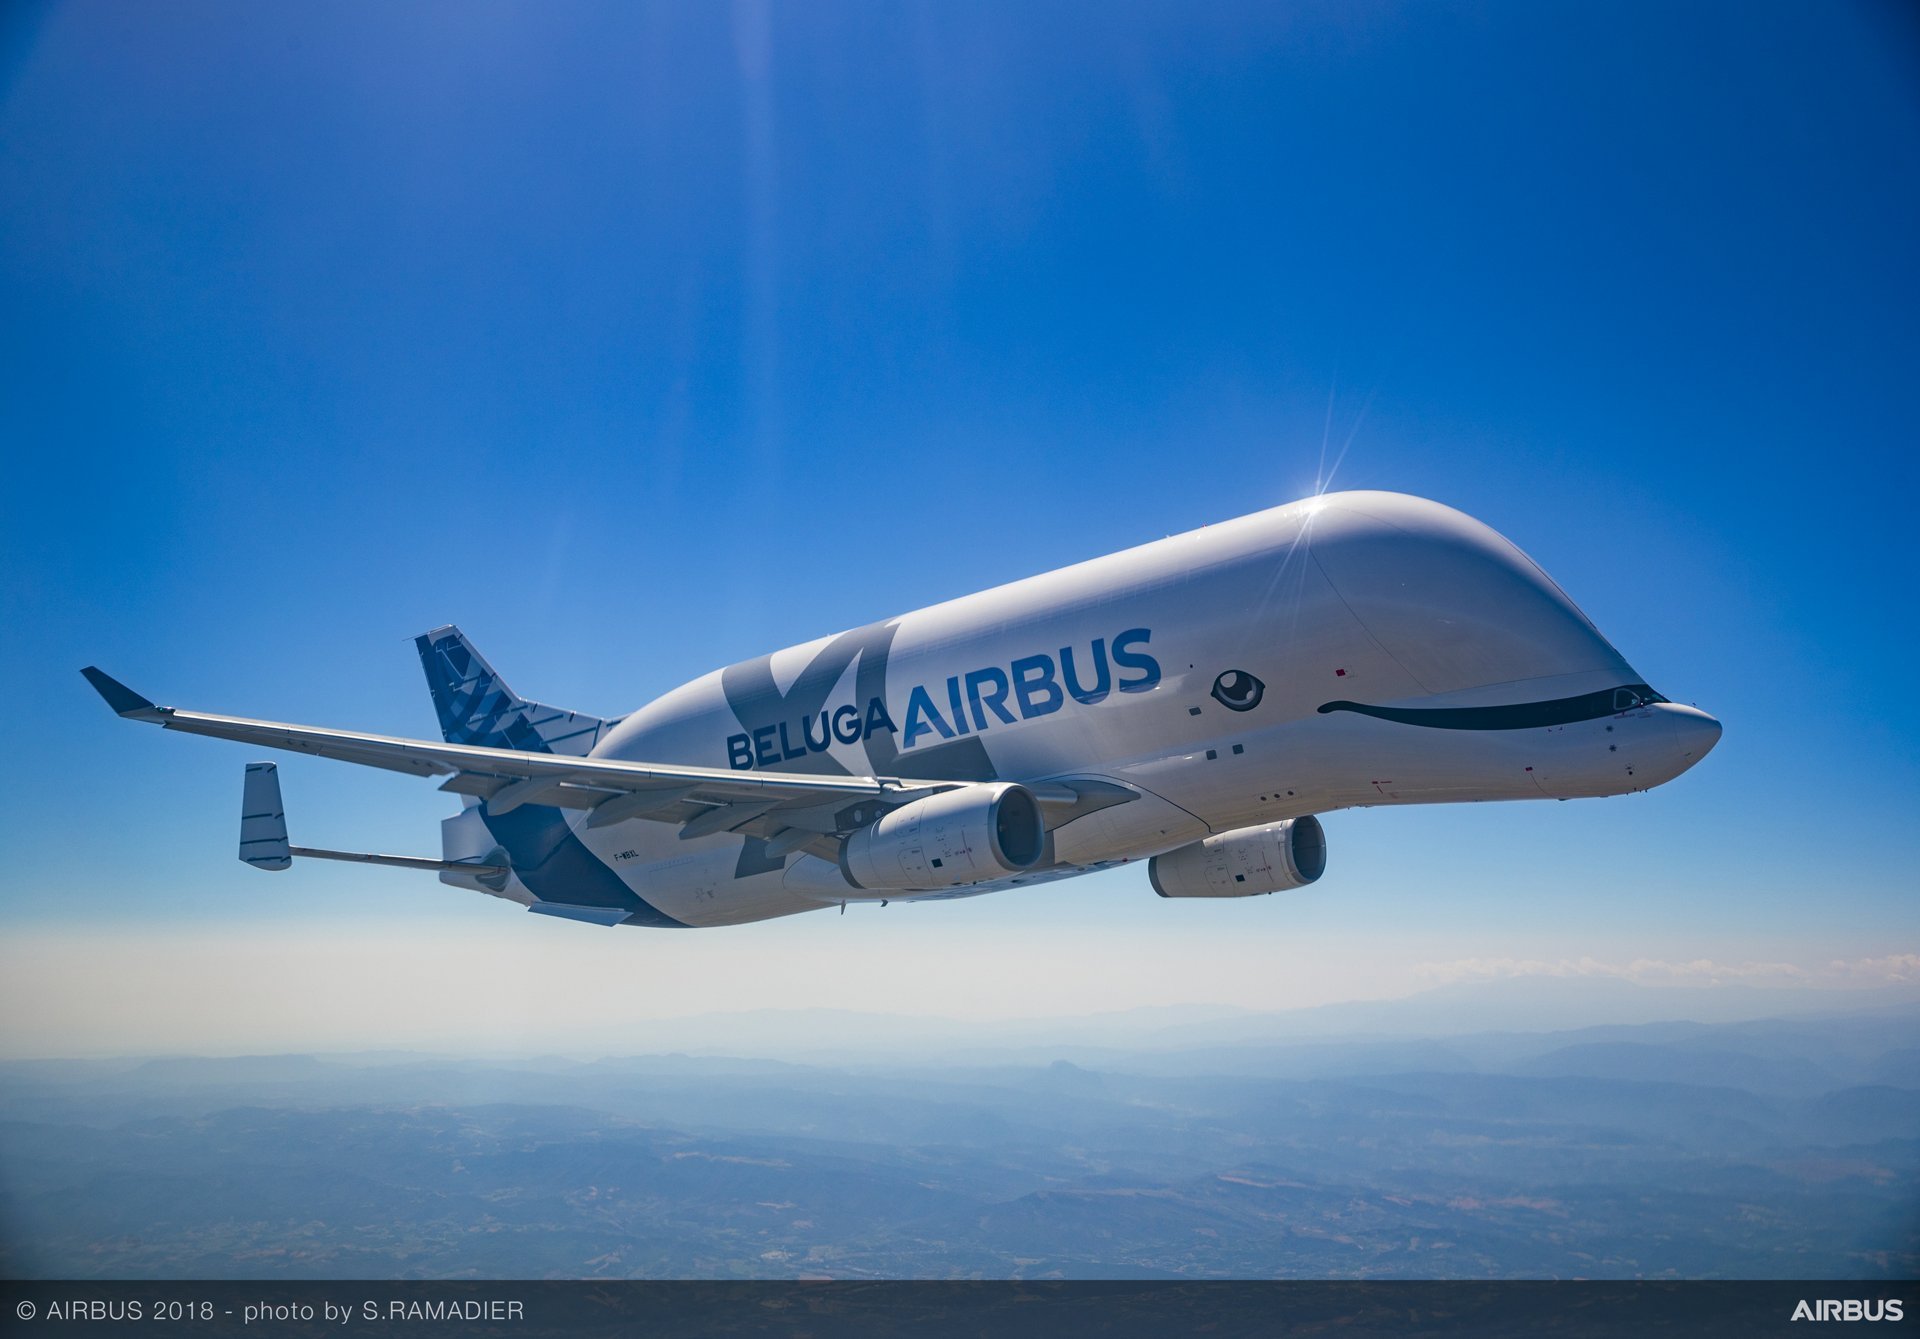  Airbus a raportat zero comenzi în februarie, pe fondul extinderii epidemiei